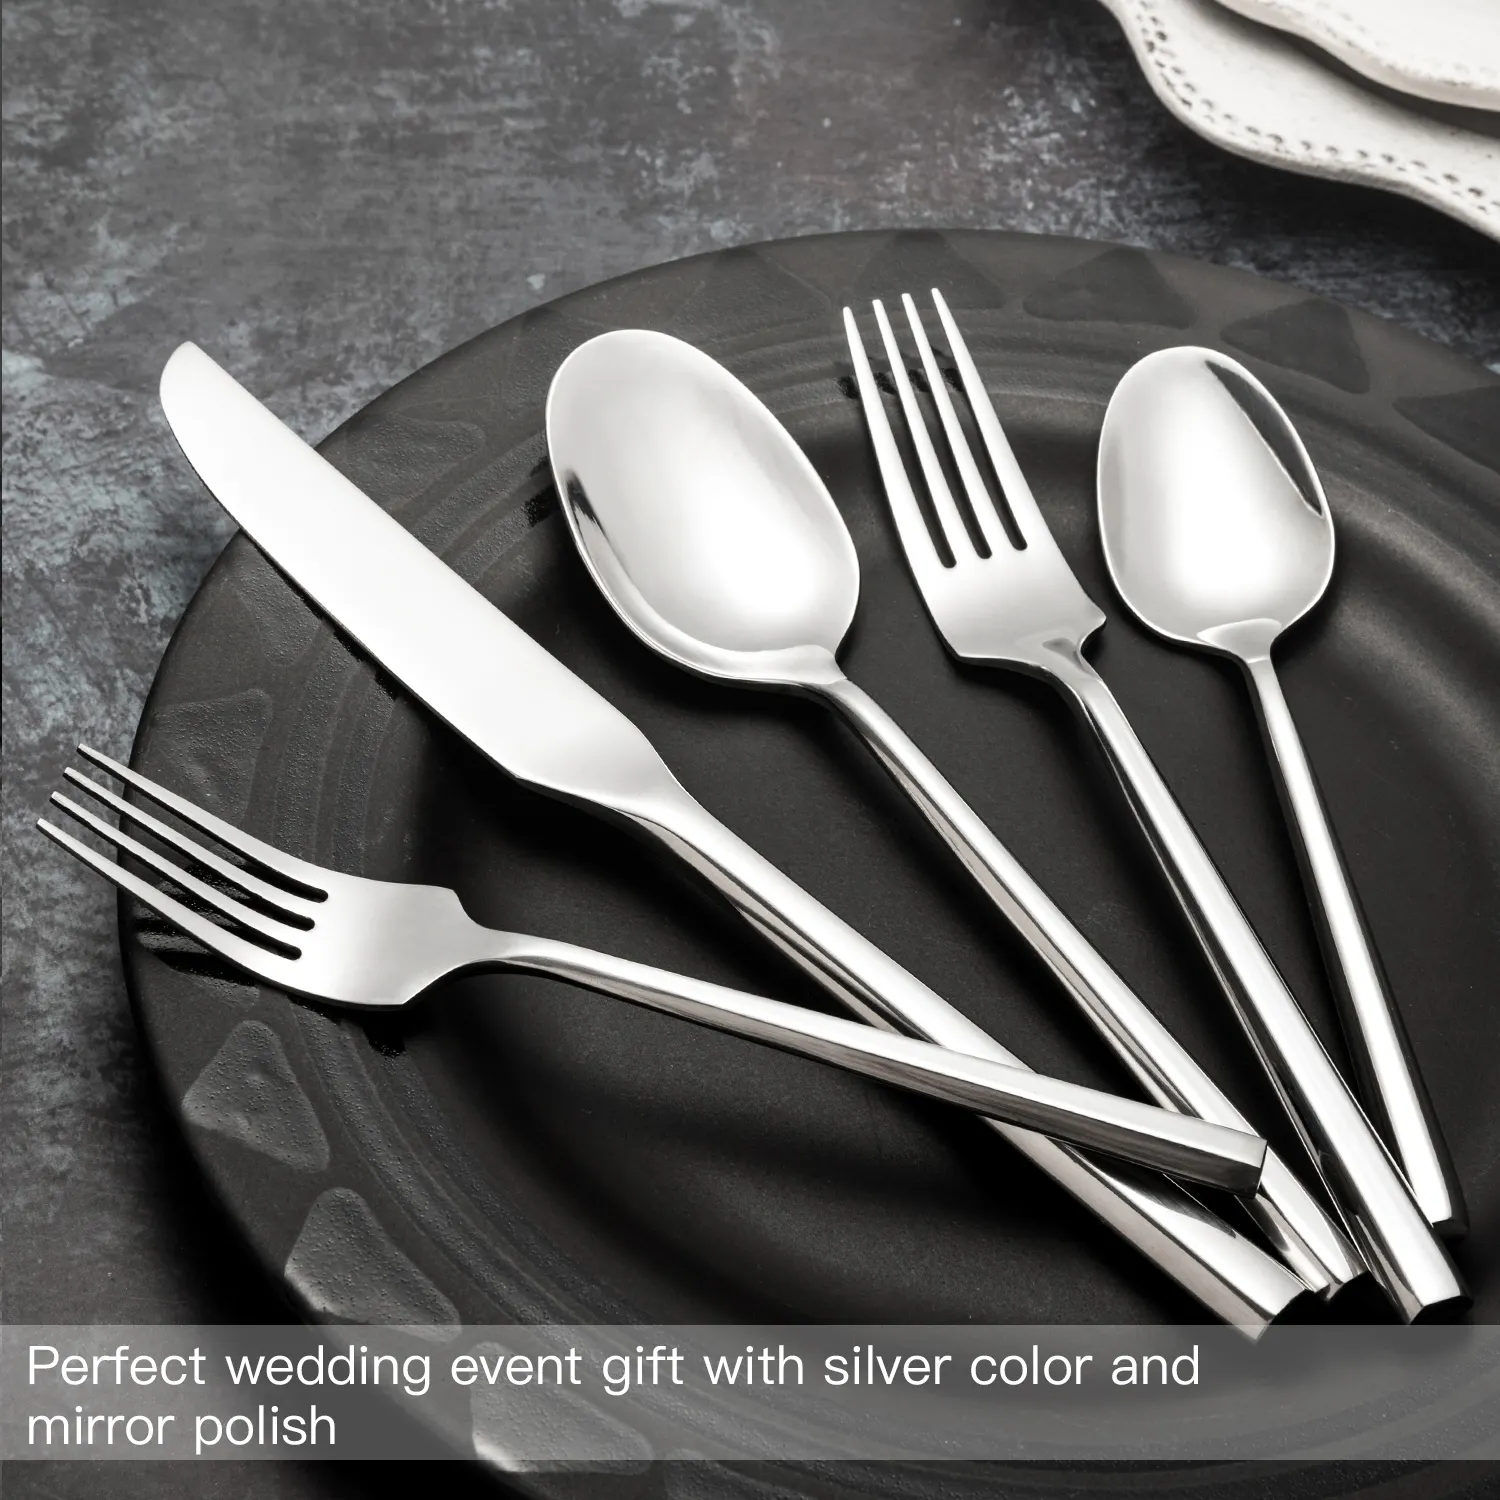 High quality cheap silver restaurant hotel silverware stainless steel cutlery wedding flatware sets